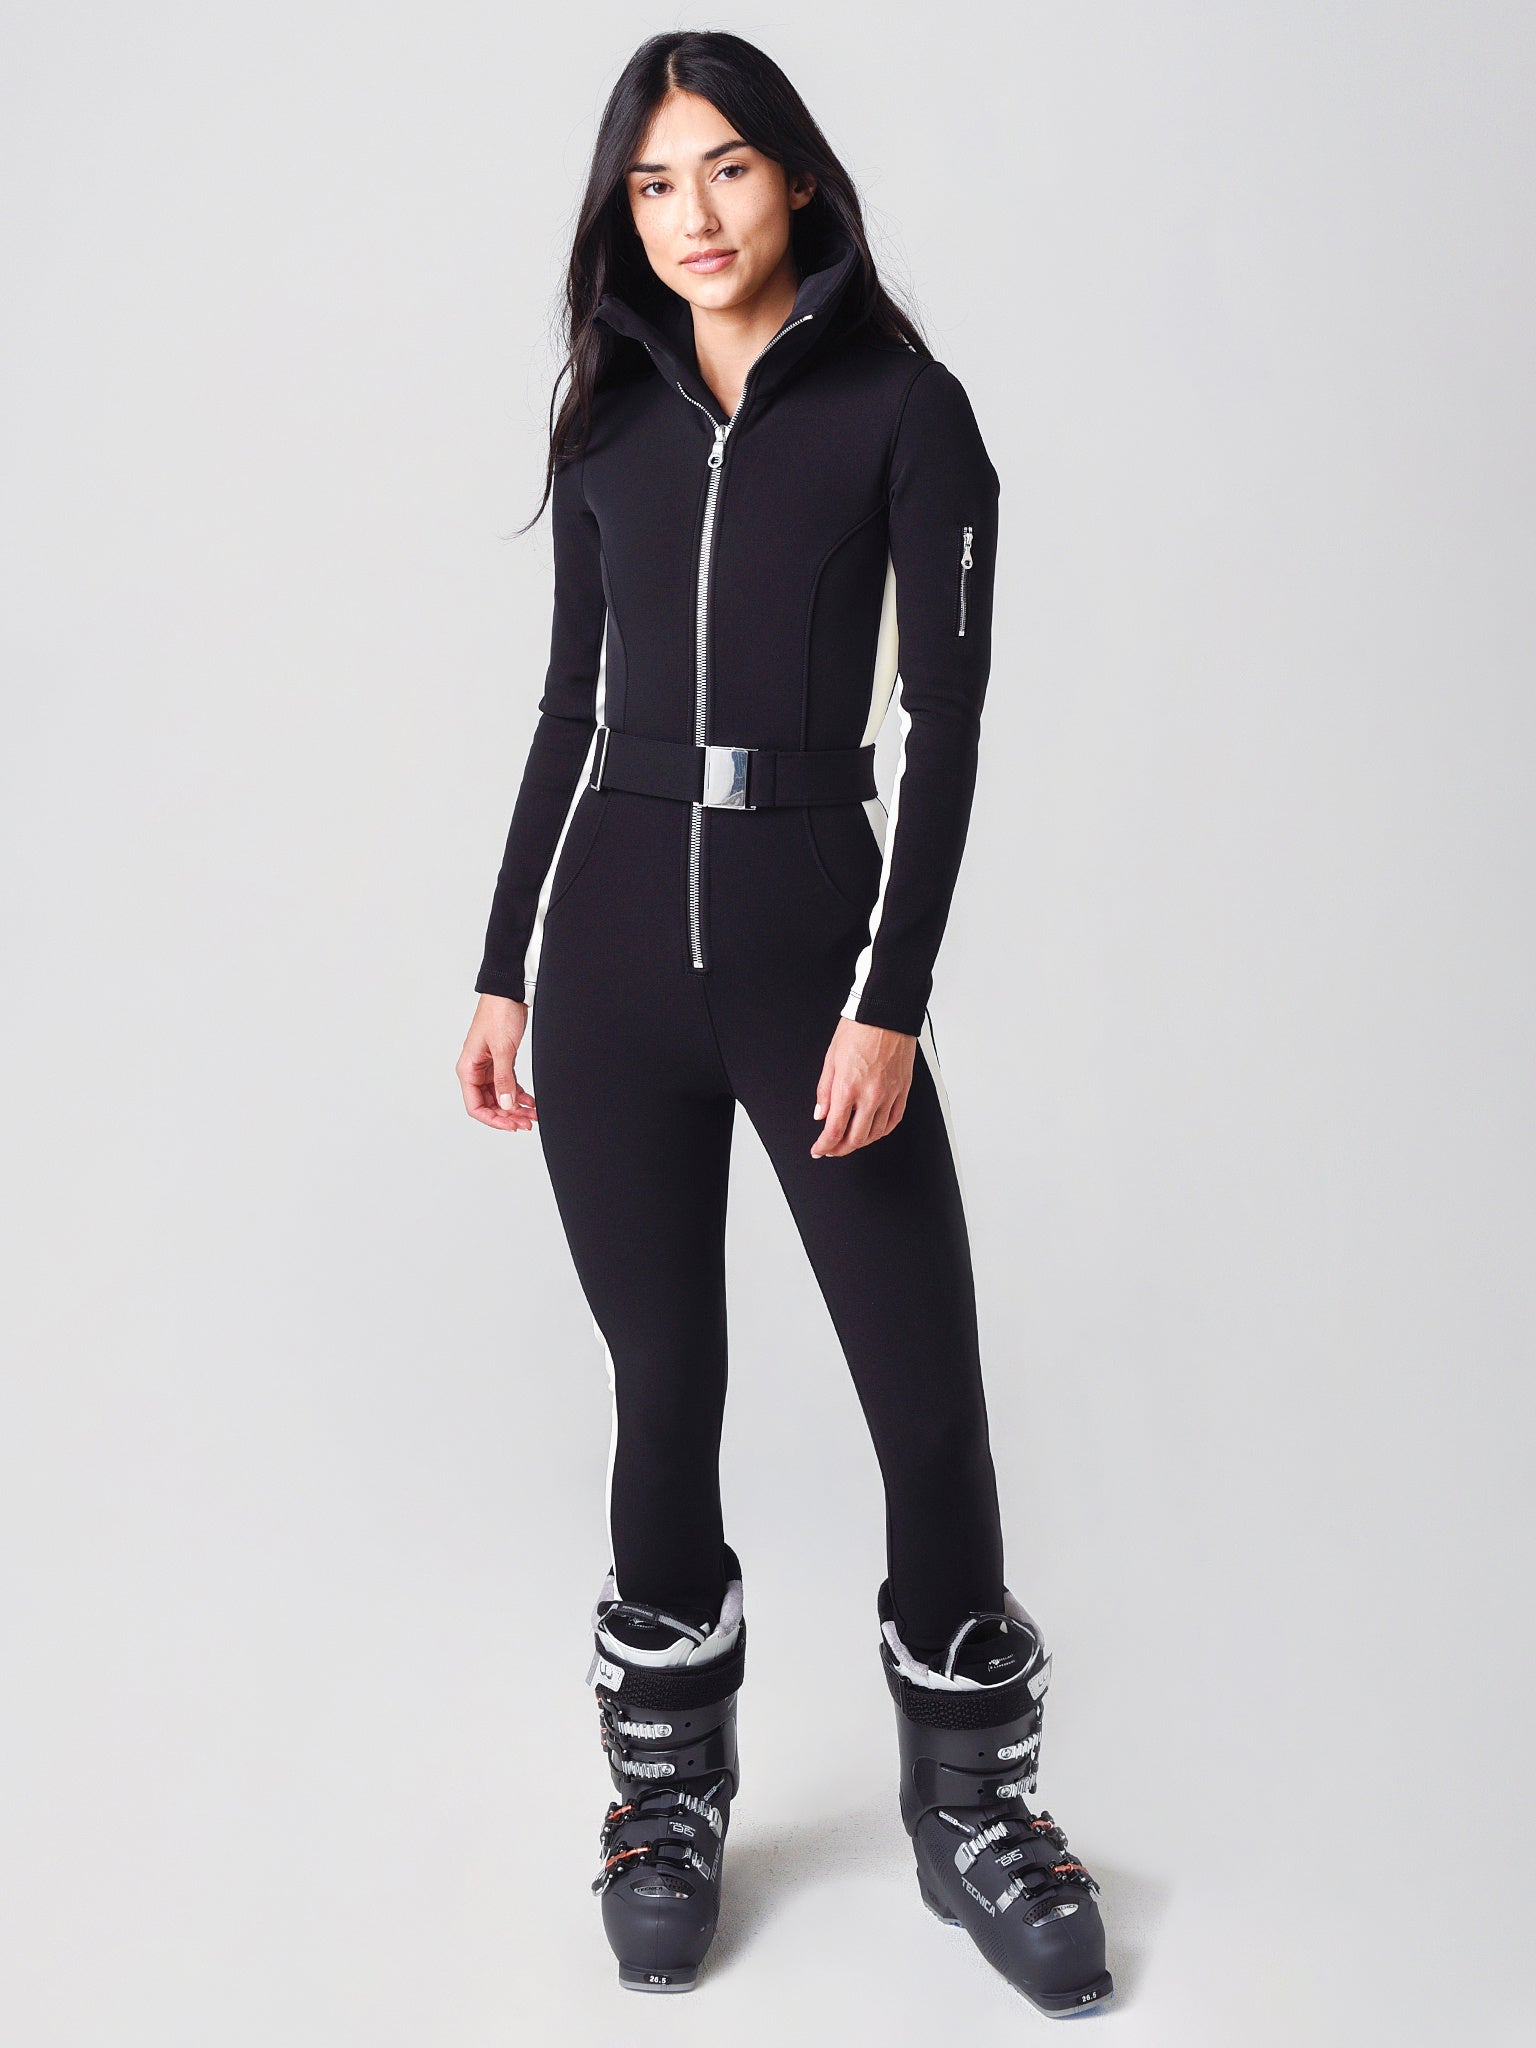 Cordova Women's Cordova Ski Suit – saintbernard.com